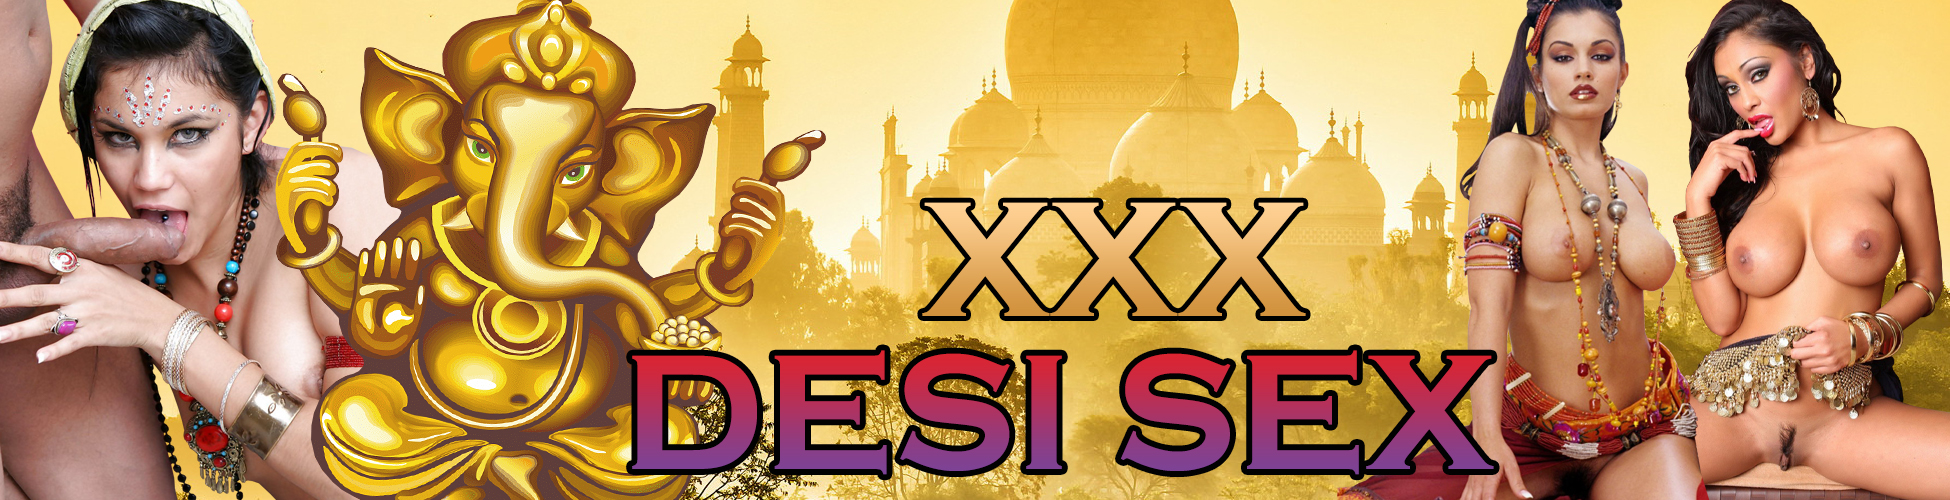 Xxx Desi Vedio Hd - XXX Desi Sex â¤ï¸ï¸ Hot HD Hindi Porn